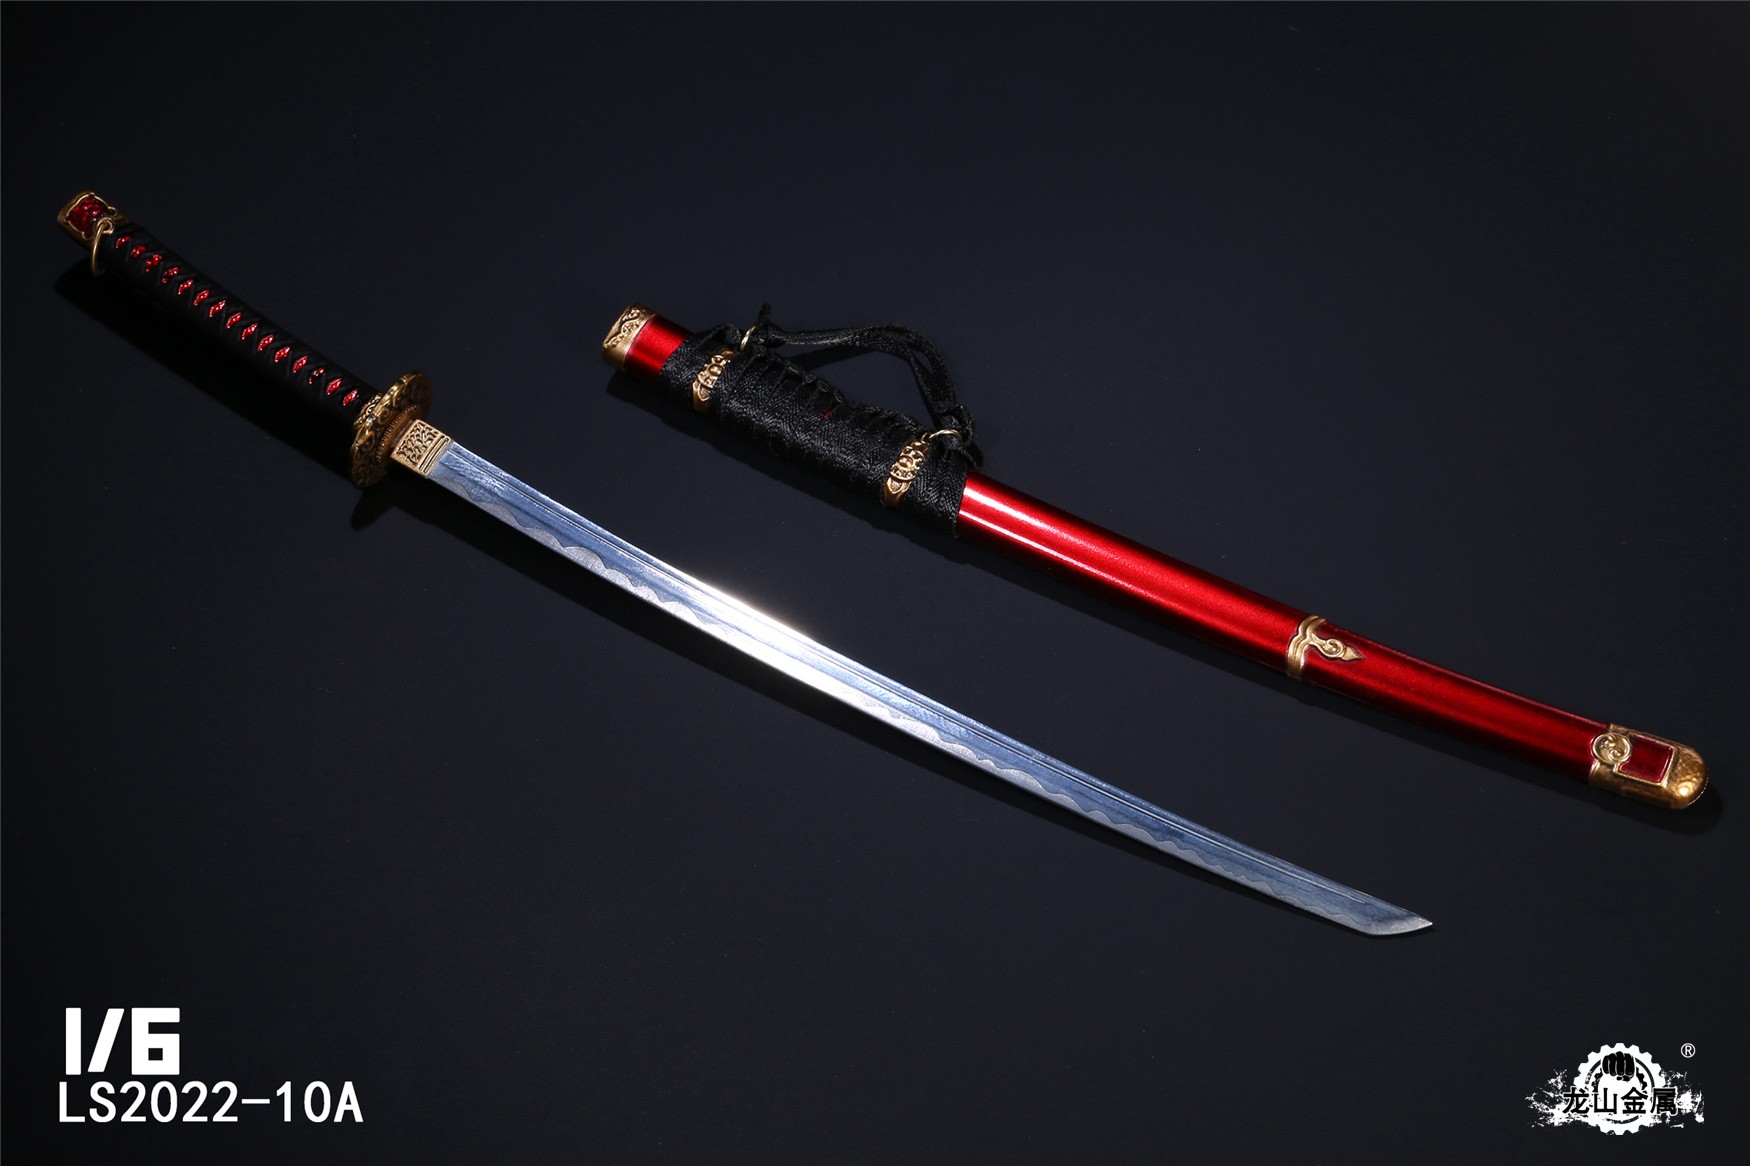 Longshan 1/6 Diecast Alloy Samurai Ronin Tachi (Red Scabbard) LS2022-10A